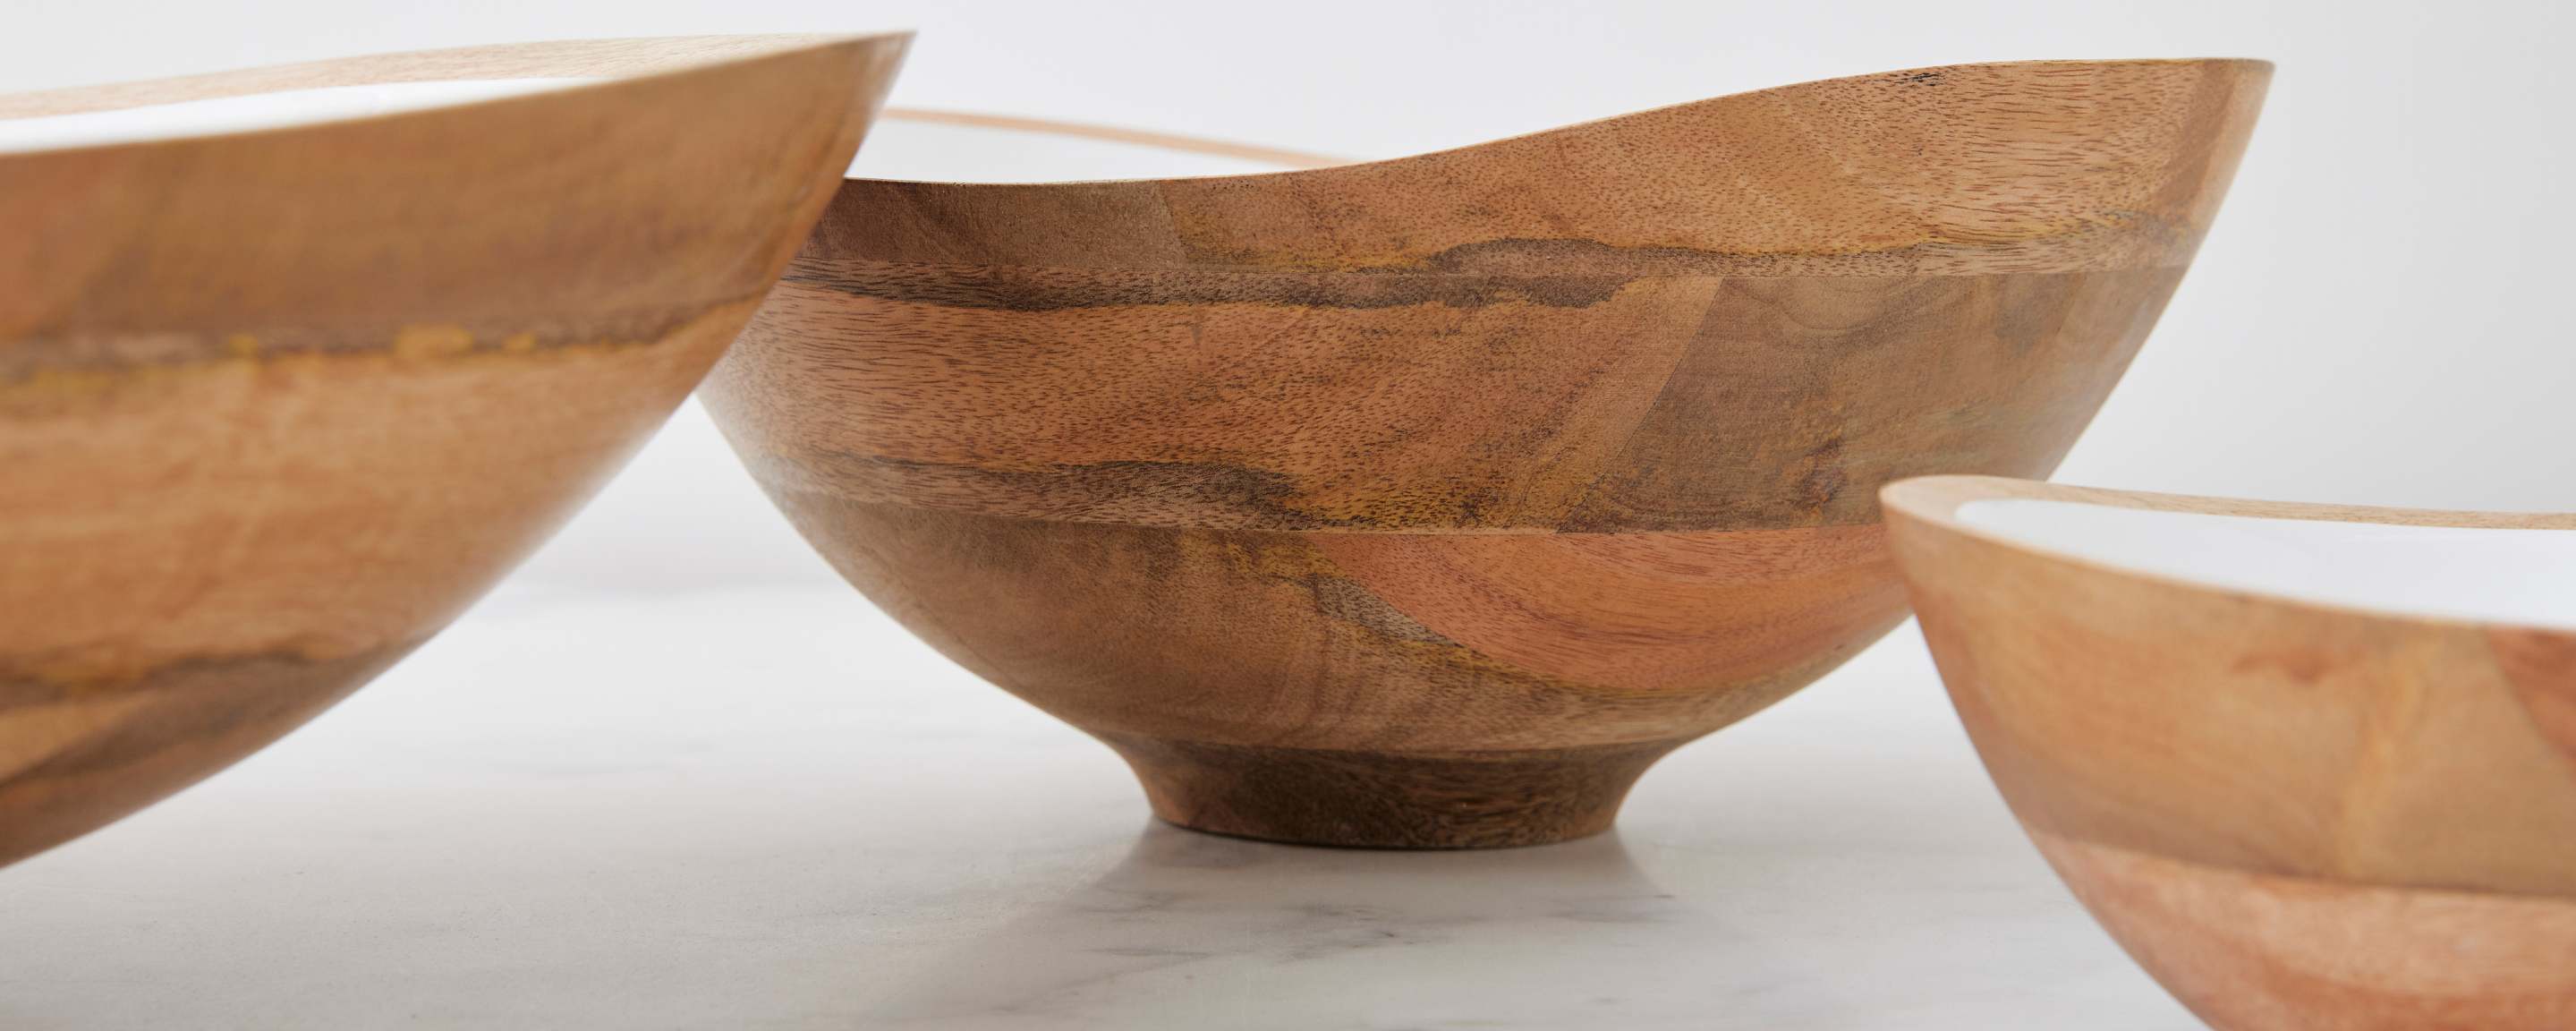 mango wood enamel bowls